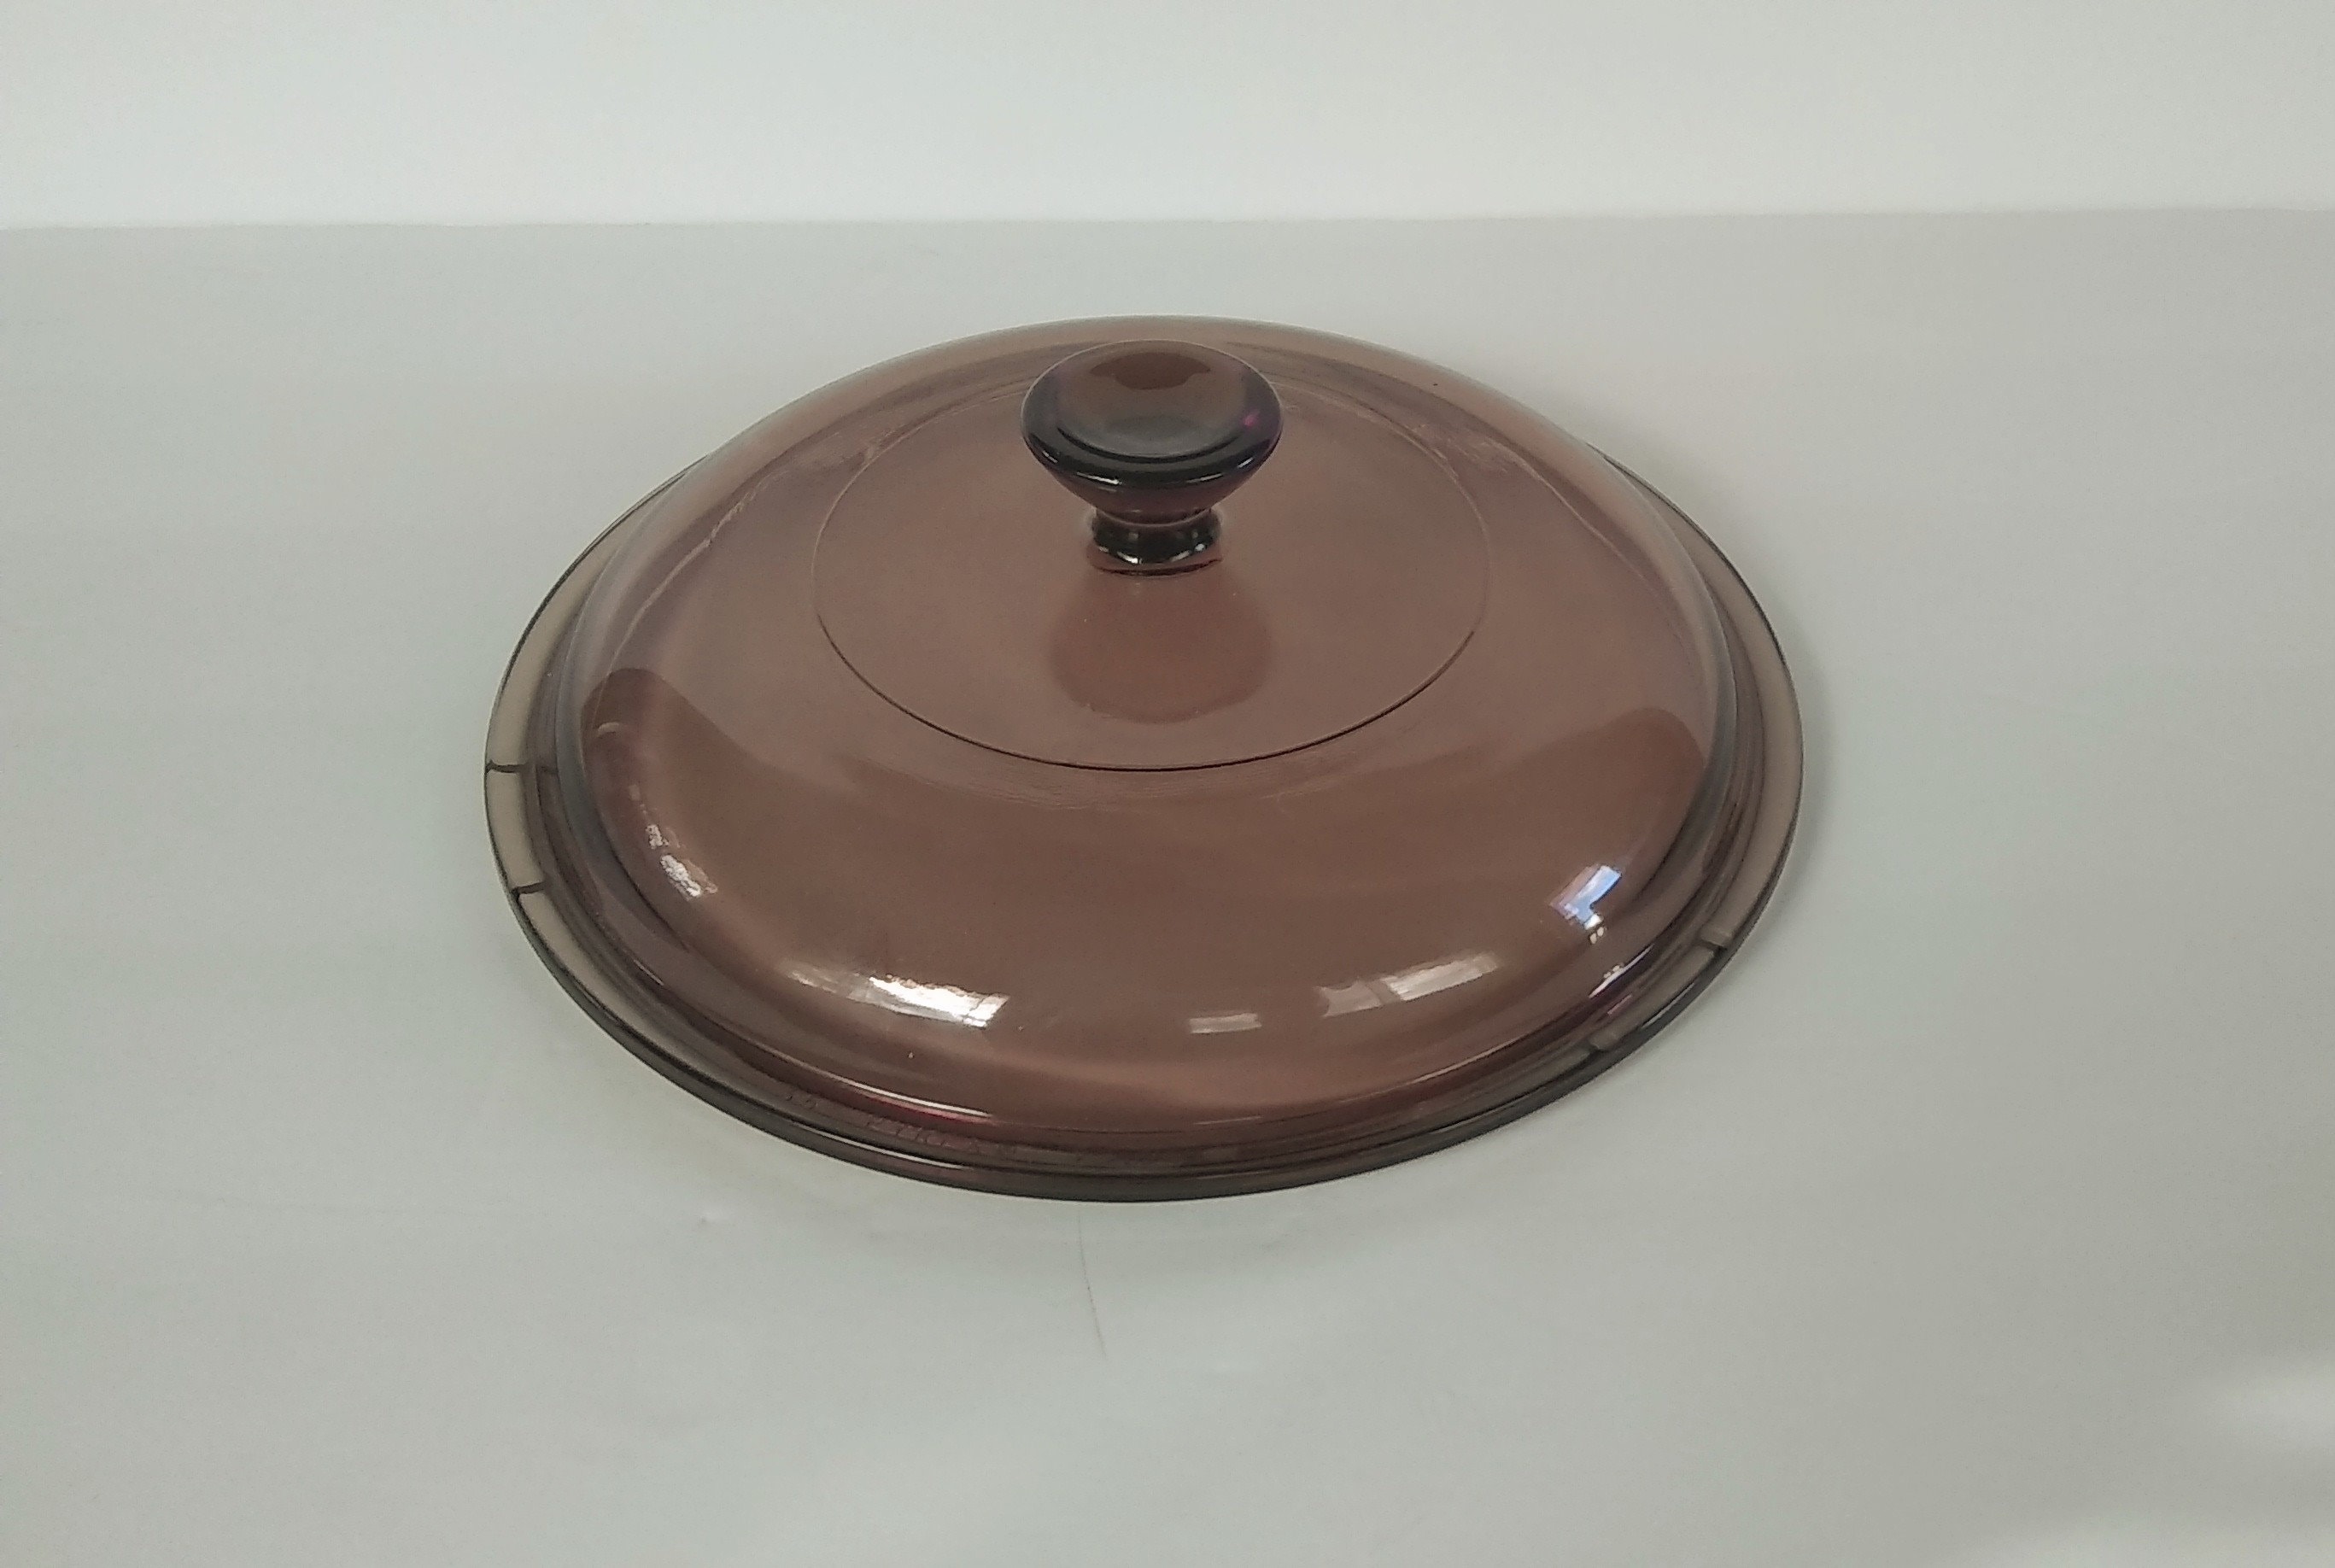 8 X 12 Vintage Fireside Amber Brown Pyrex Glass Casserole Baking Dish Pyrex  232 With Handles a Medium Size Retro Glass Cookware/ Bakeware 